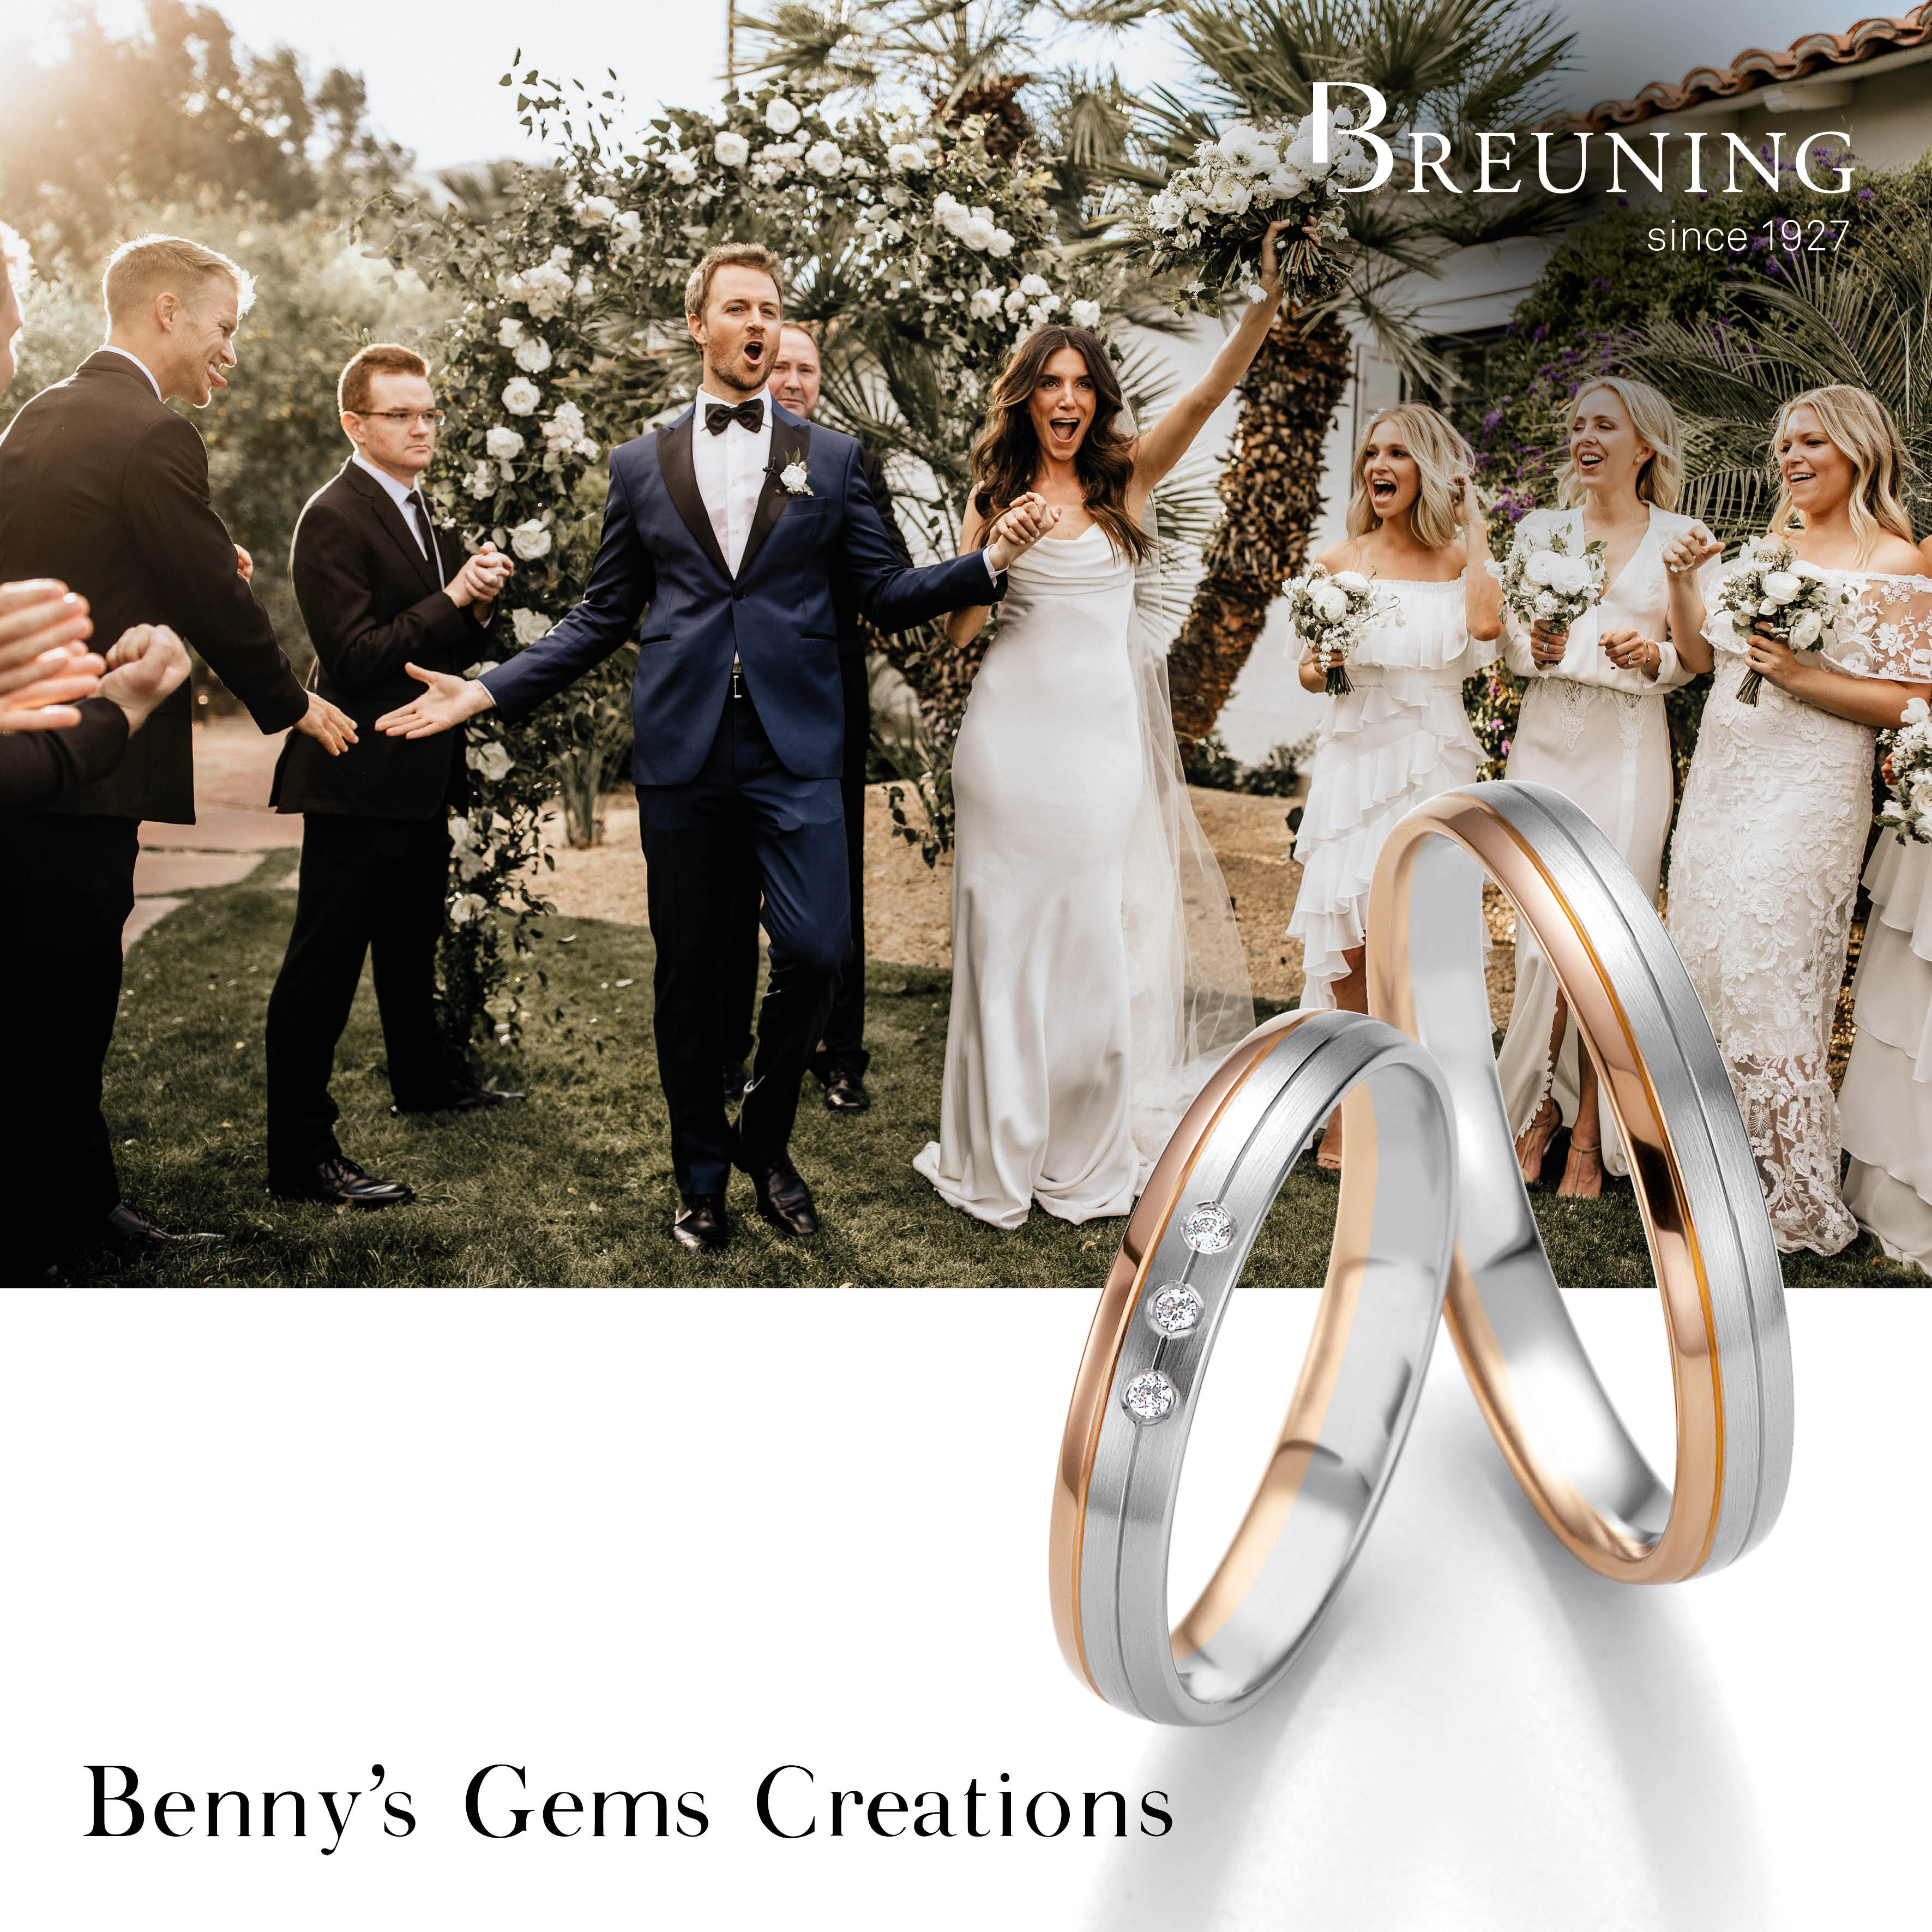 Benny's Gems Creations